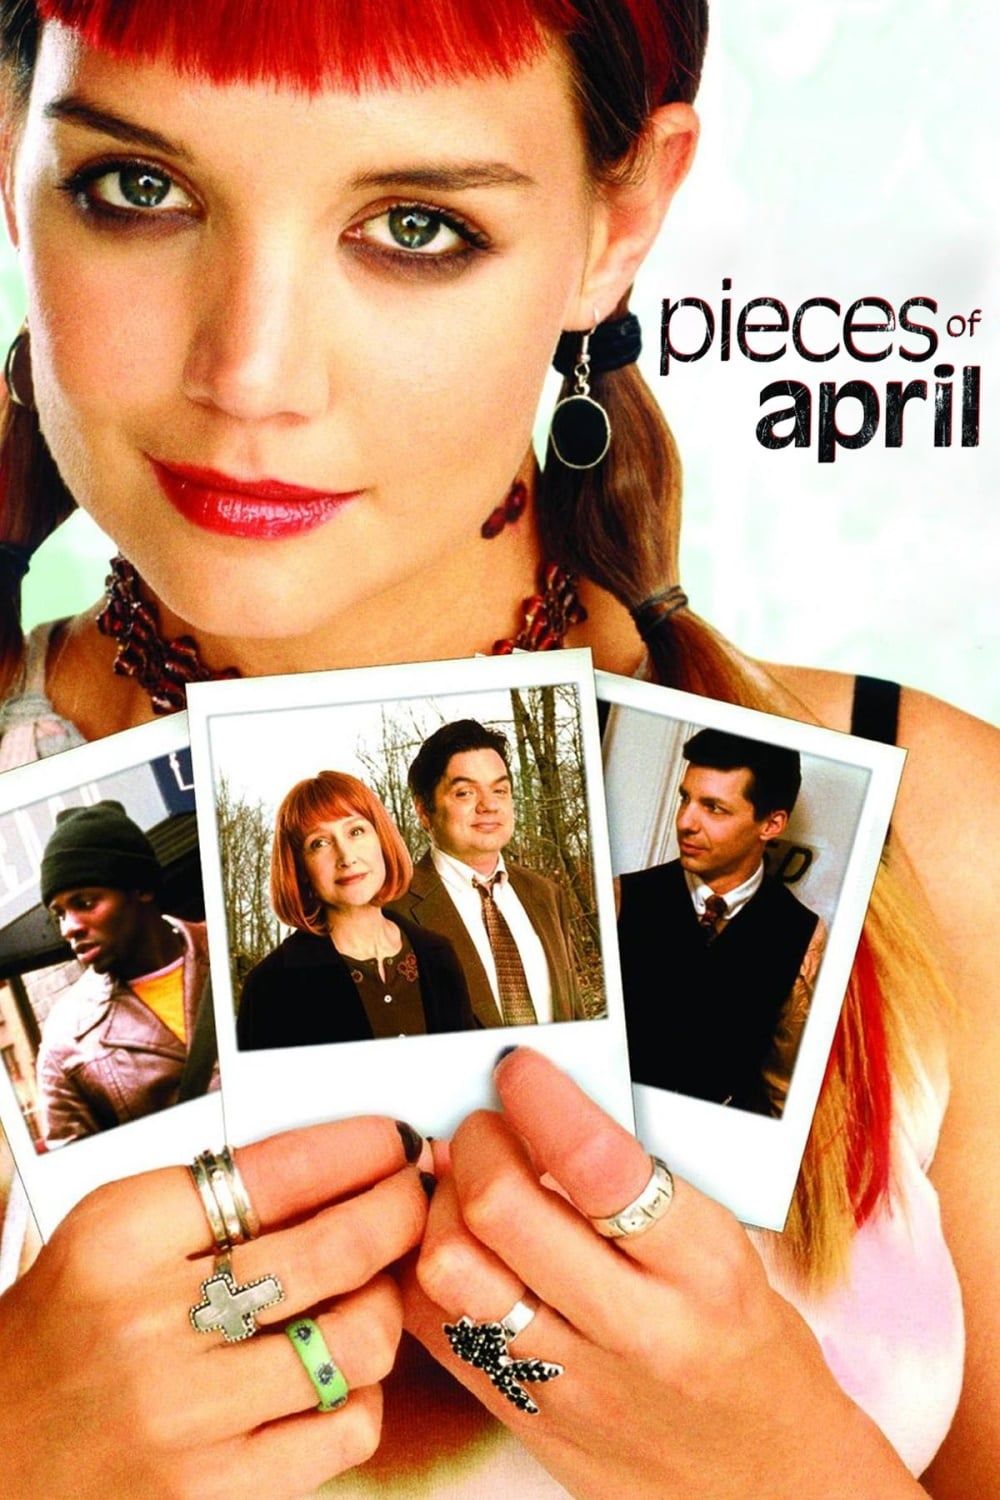 Pieces of April' (2003) a harsh, sweet tear-jerker